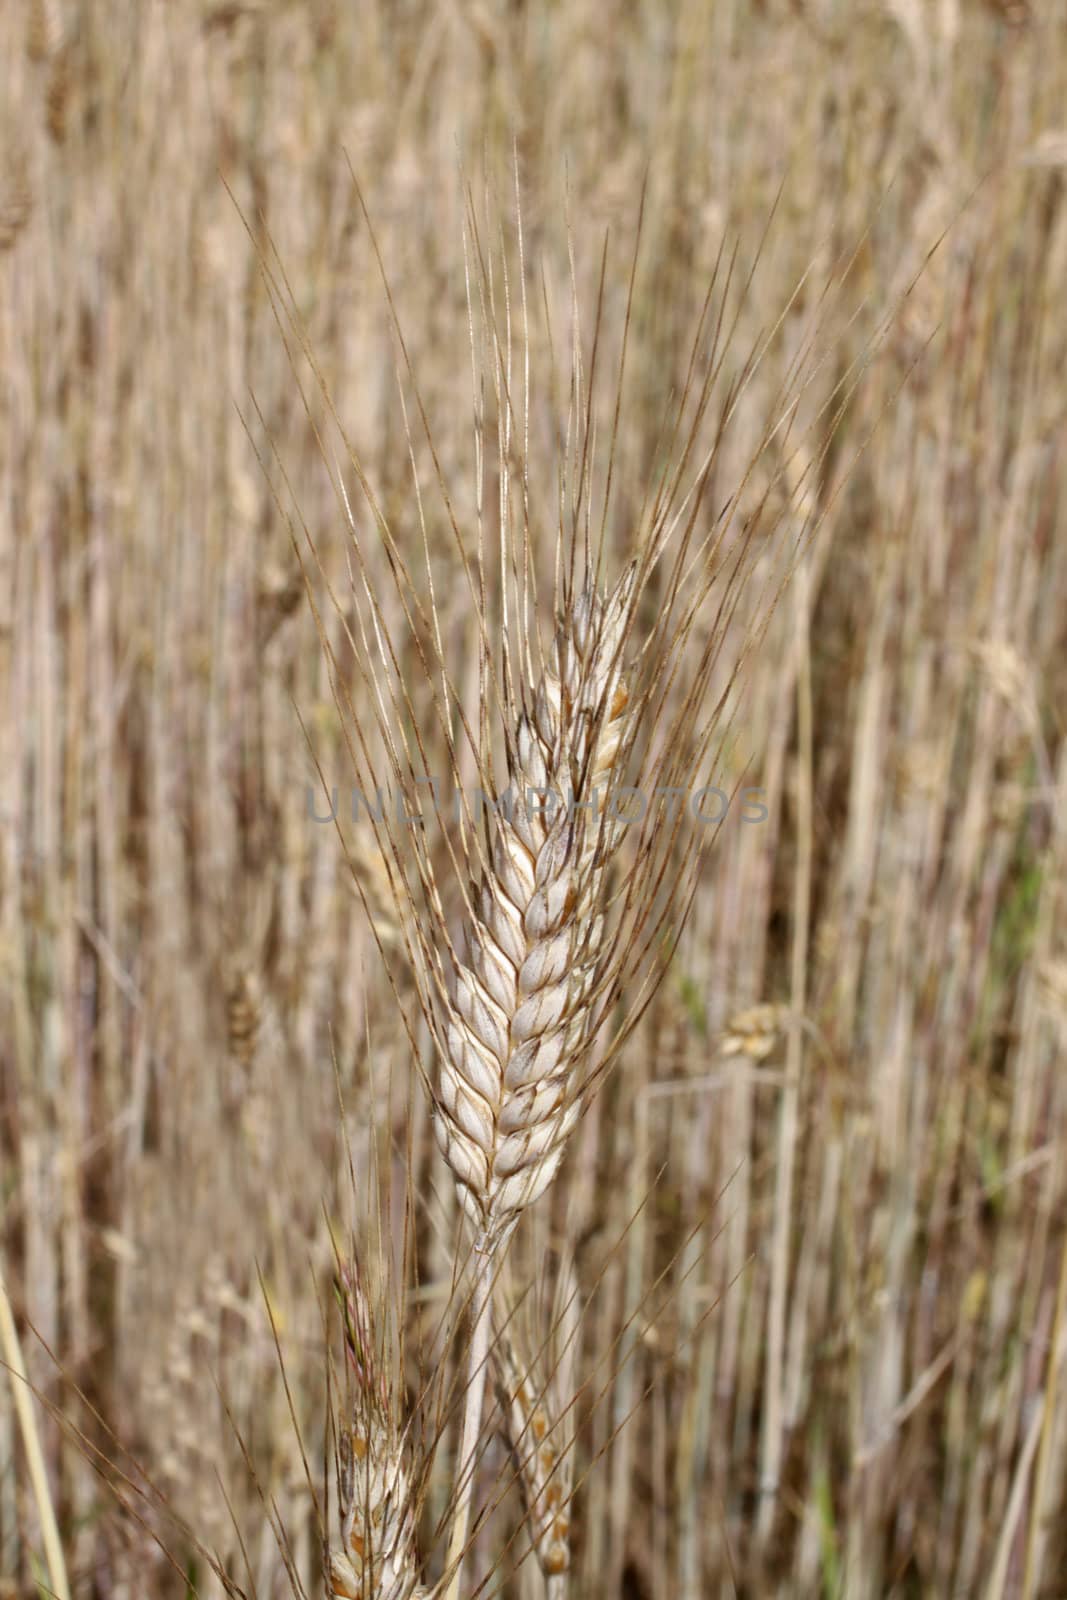 Barley ear (Raw materials for beer)